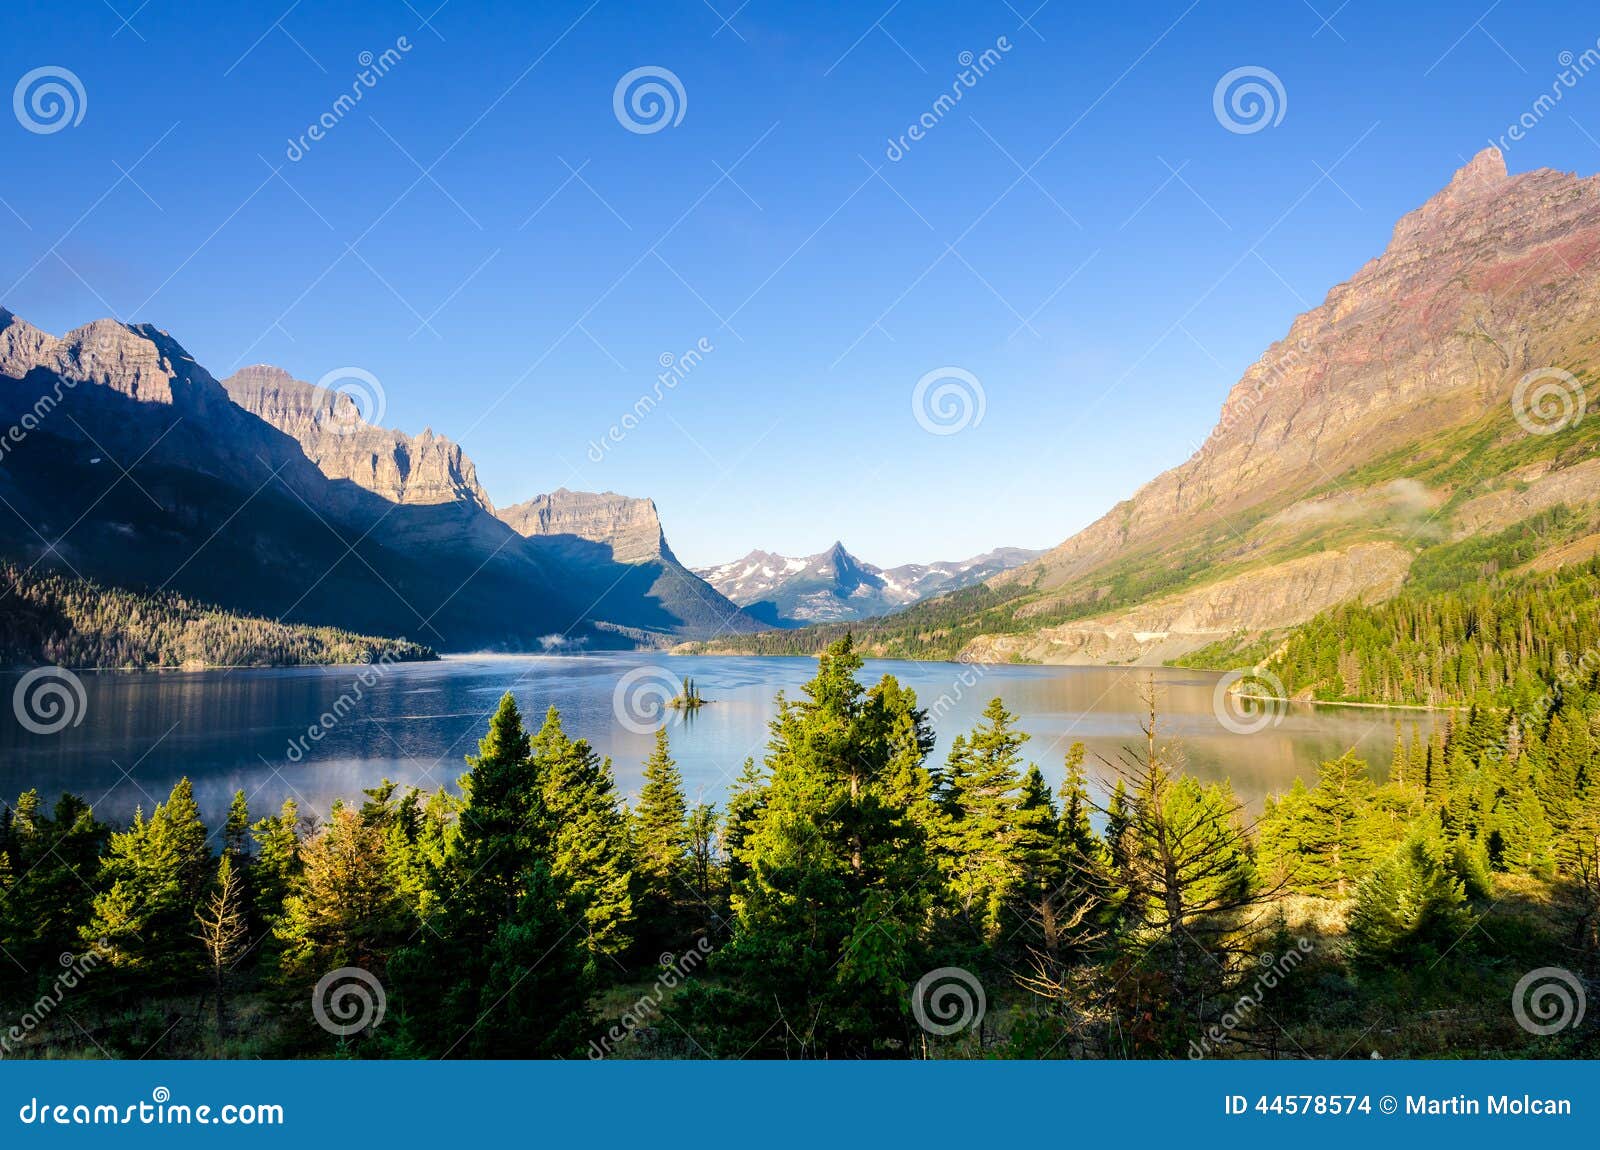 scenic view of mountain range in glacier np, montana